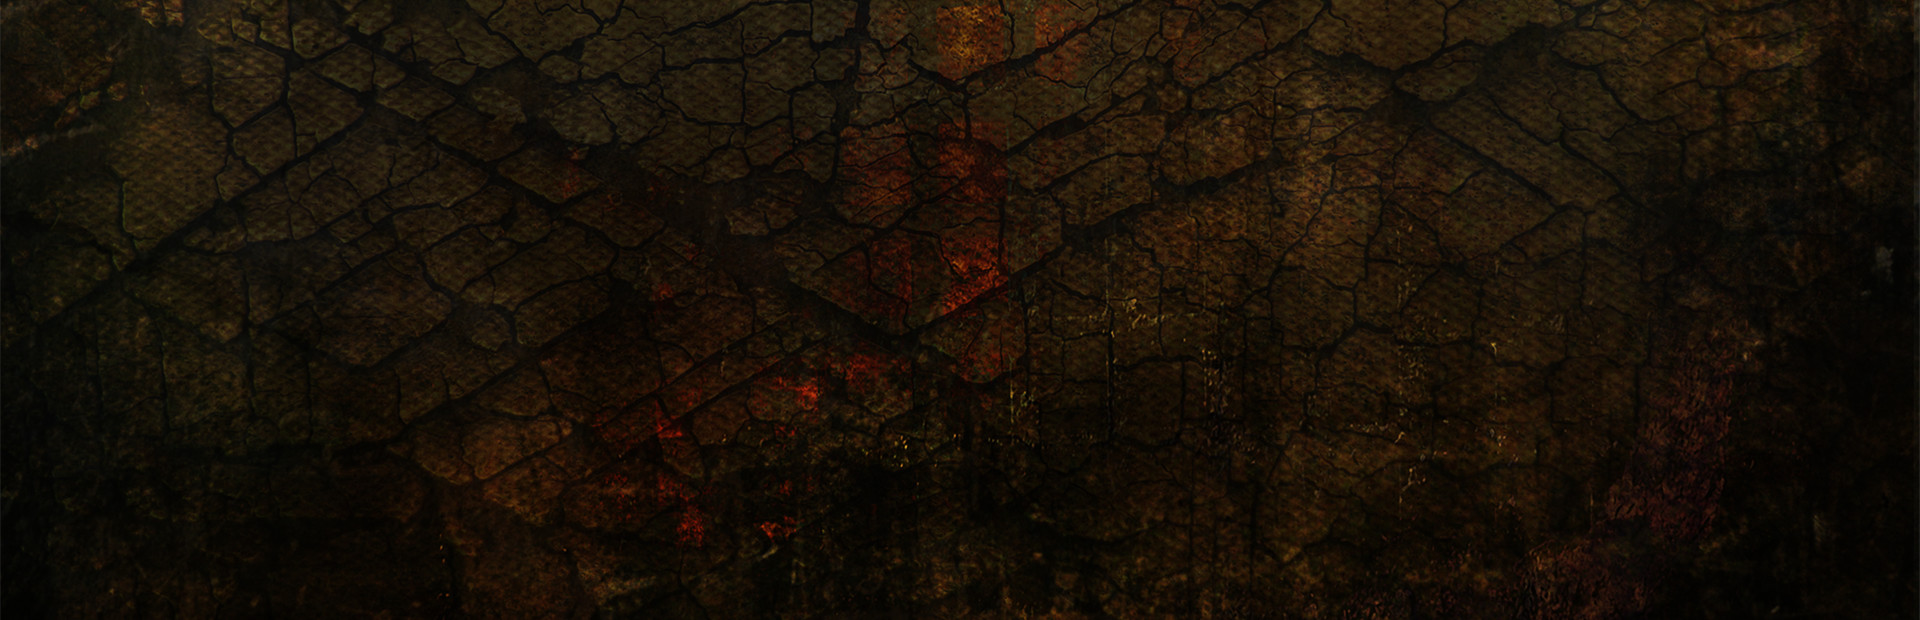 Contagion VR: Outbreak Demo cover image